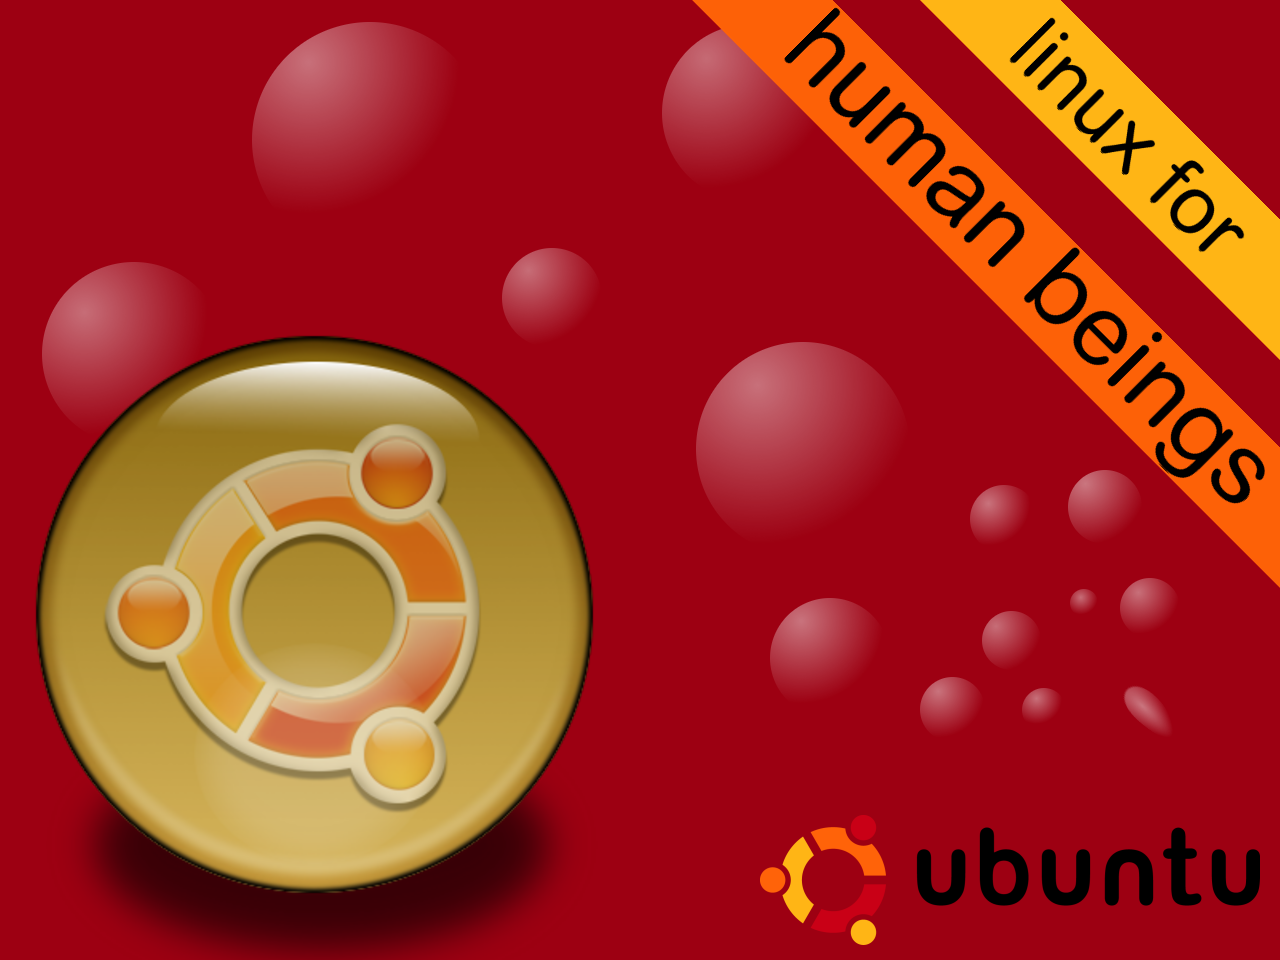 50892-Ubuntu Sphere and vector.png